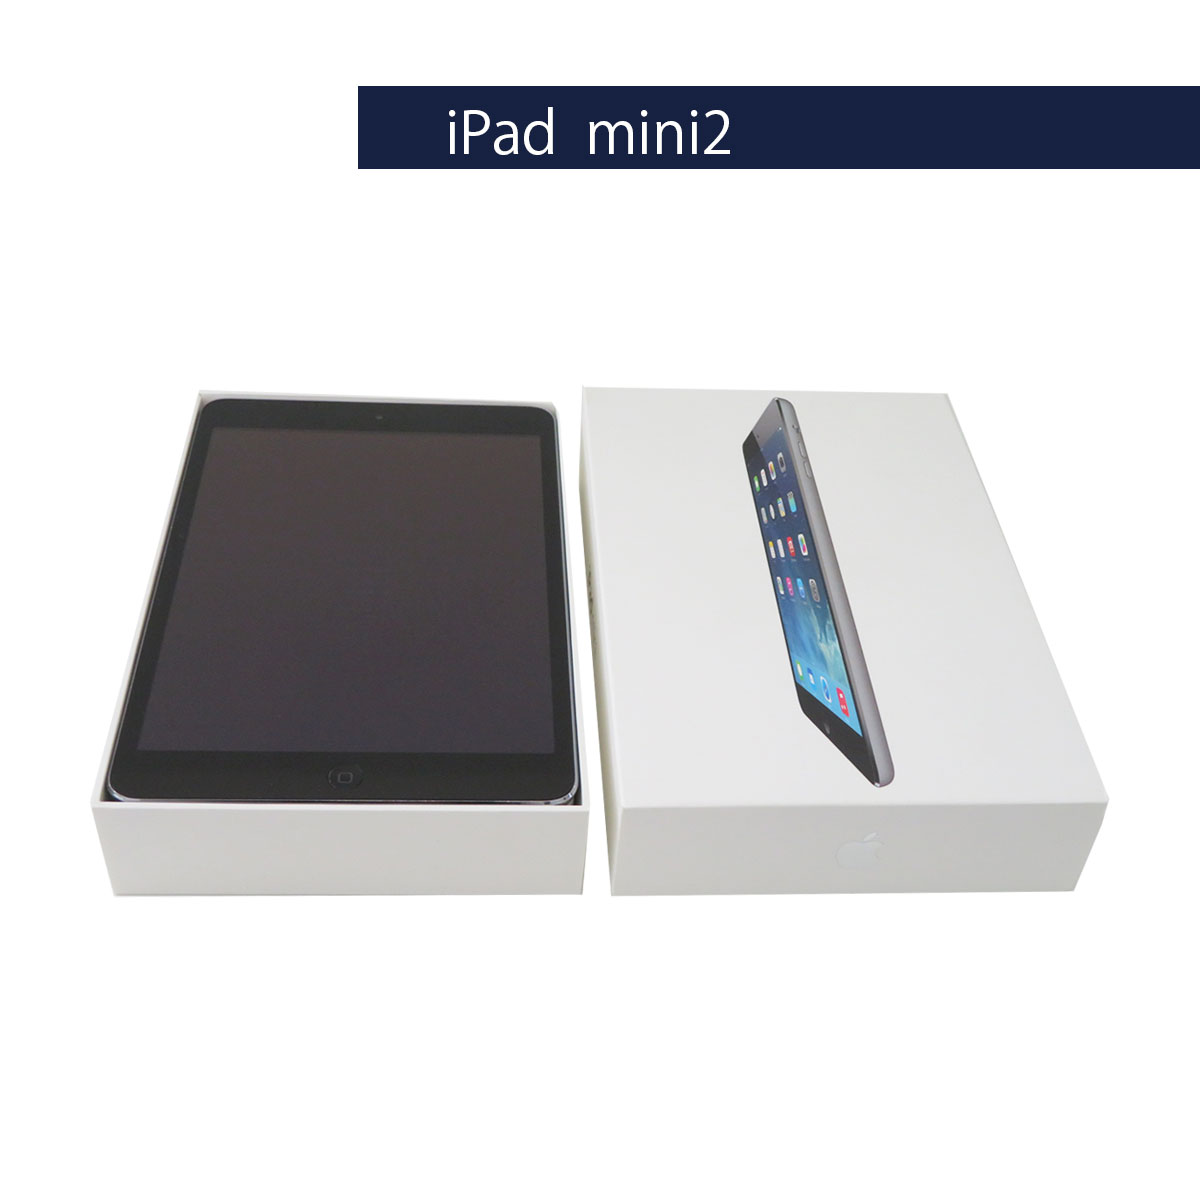 iPad - iPad mini2 ME276J/A wifi 16GB Space Grayの+sangishop.com